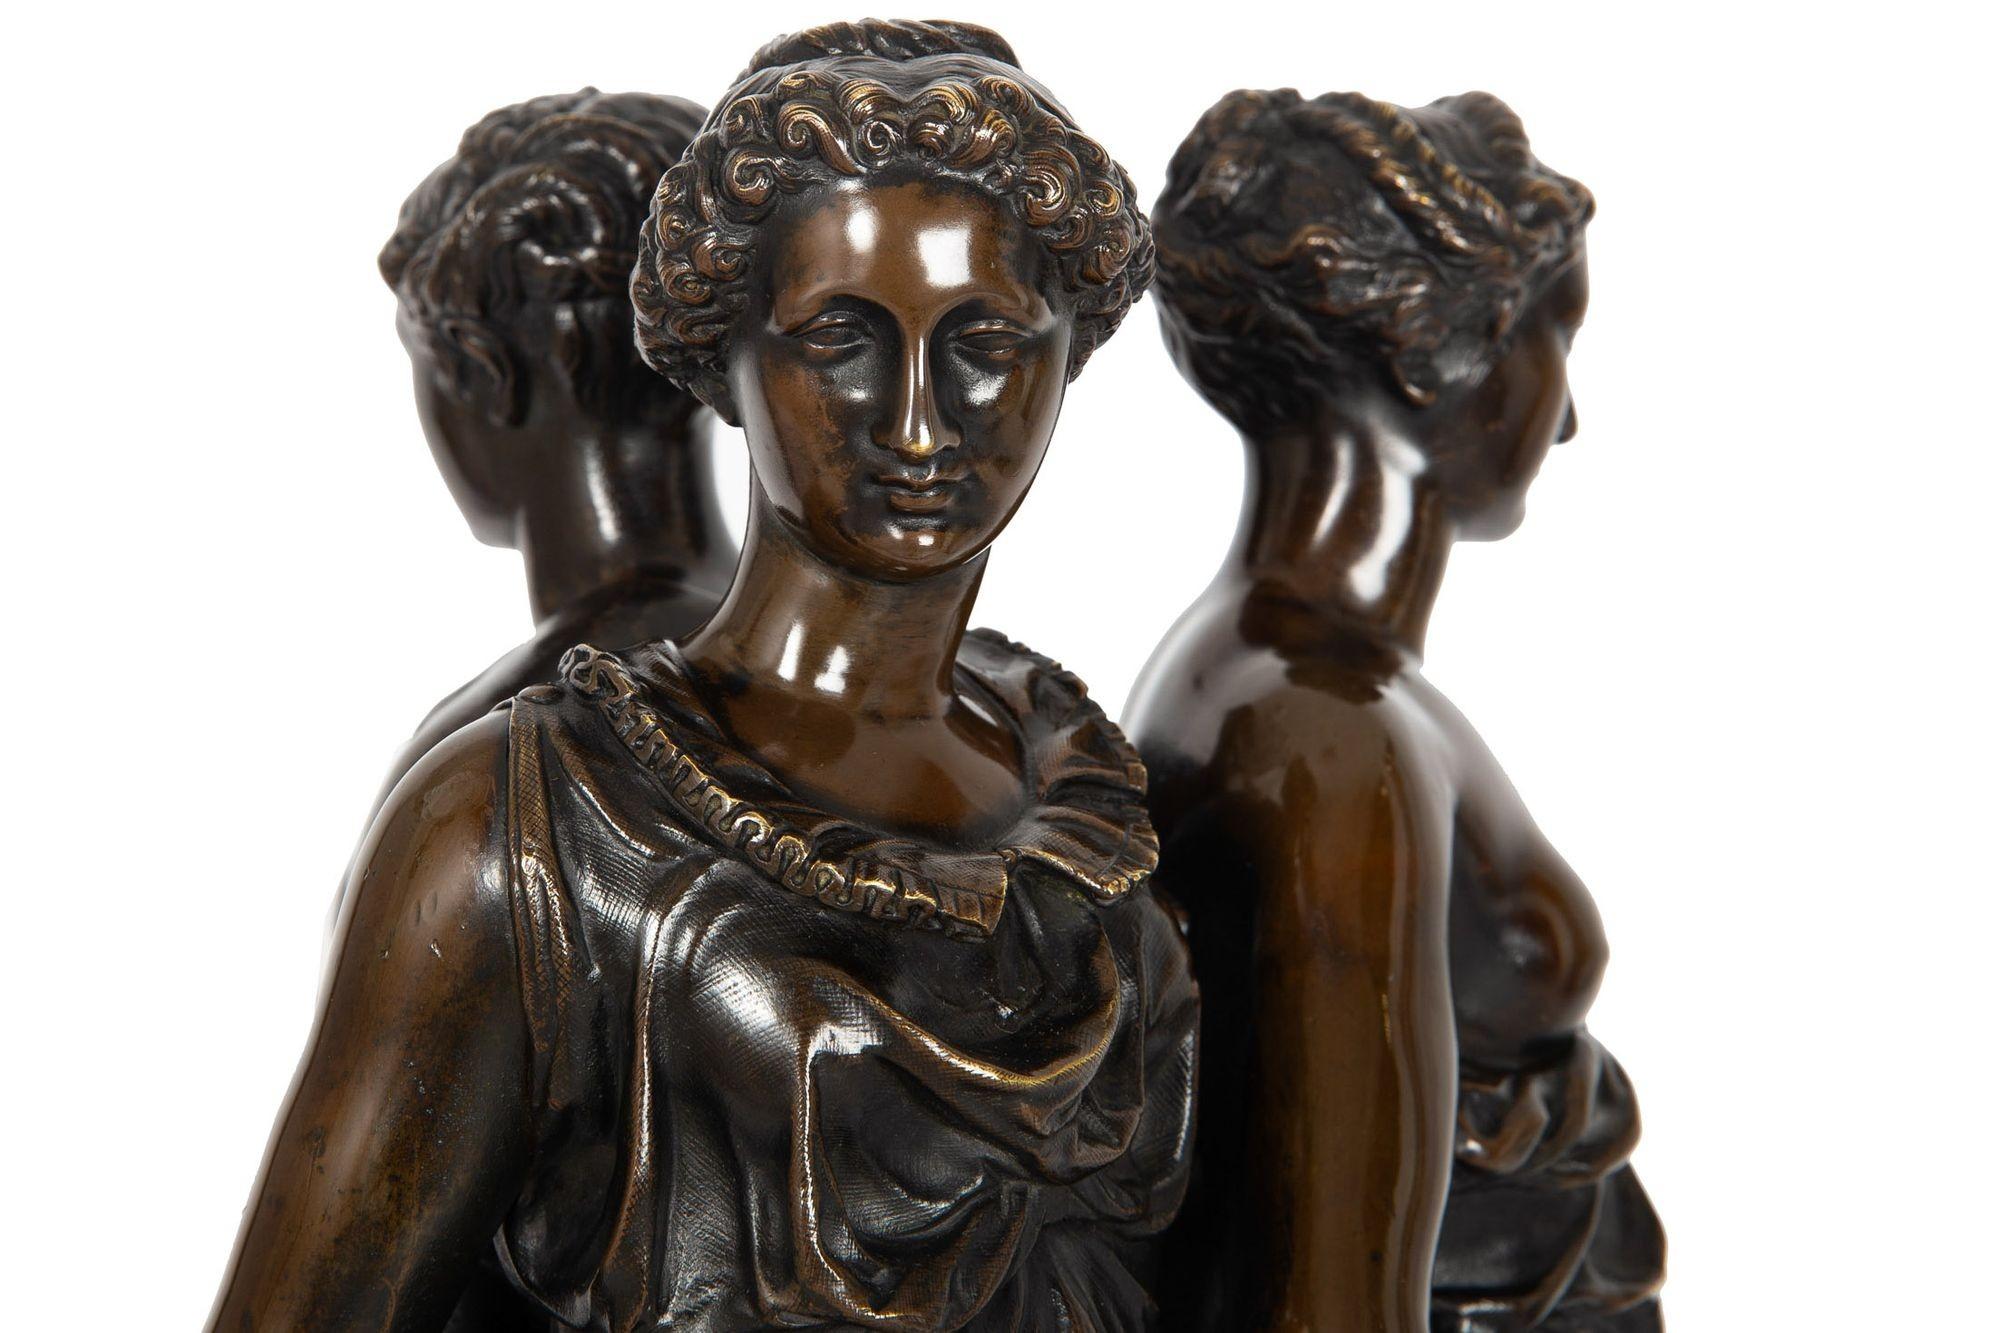 19th Century French Antique Bronze Sculpture “Three Graces” after Germain Pilon For Sale